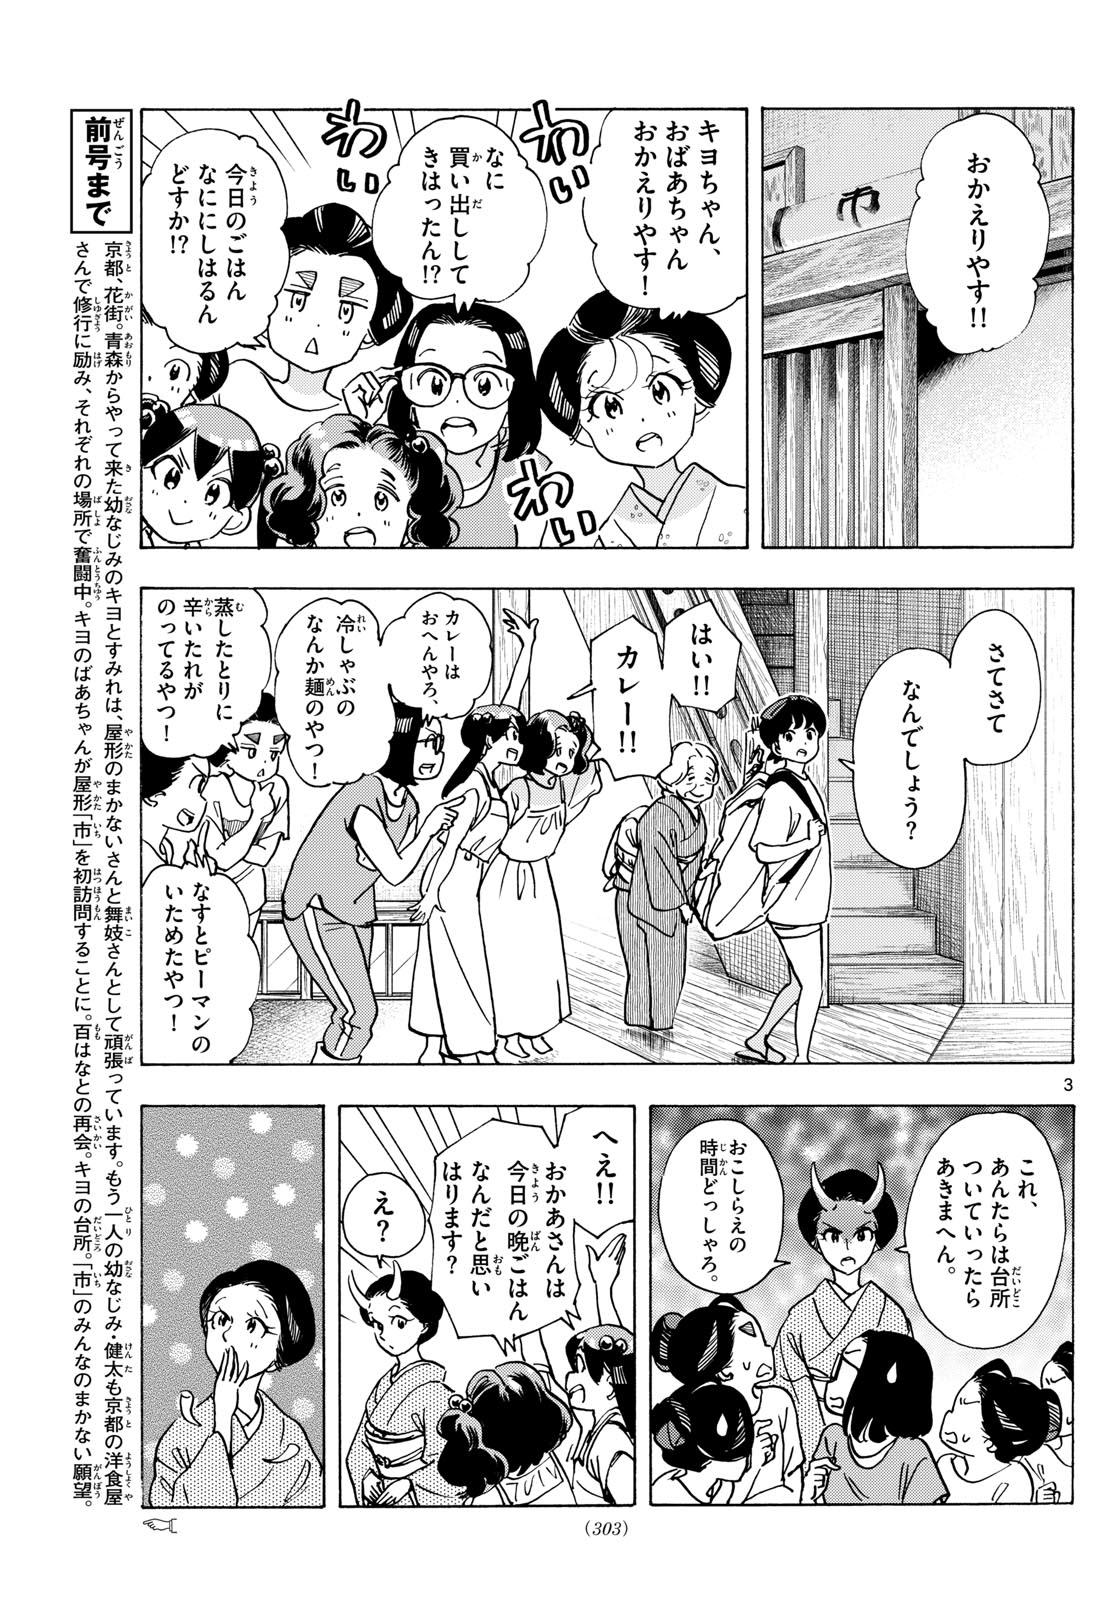 Maiko-san Chi no Makanai-san - Chapter 304 - Page 3